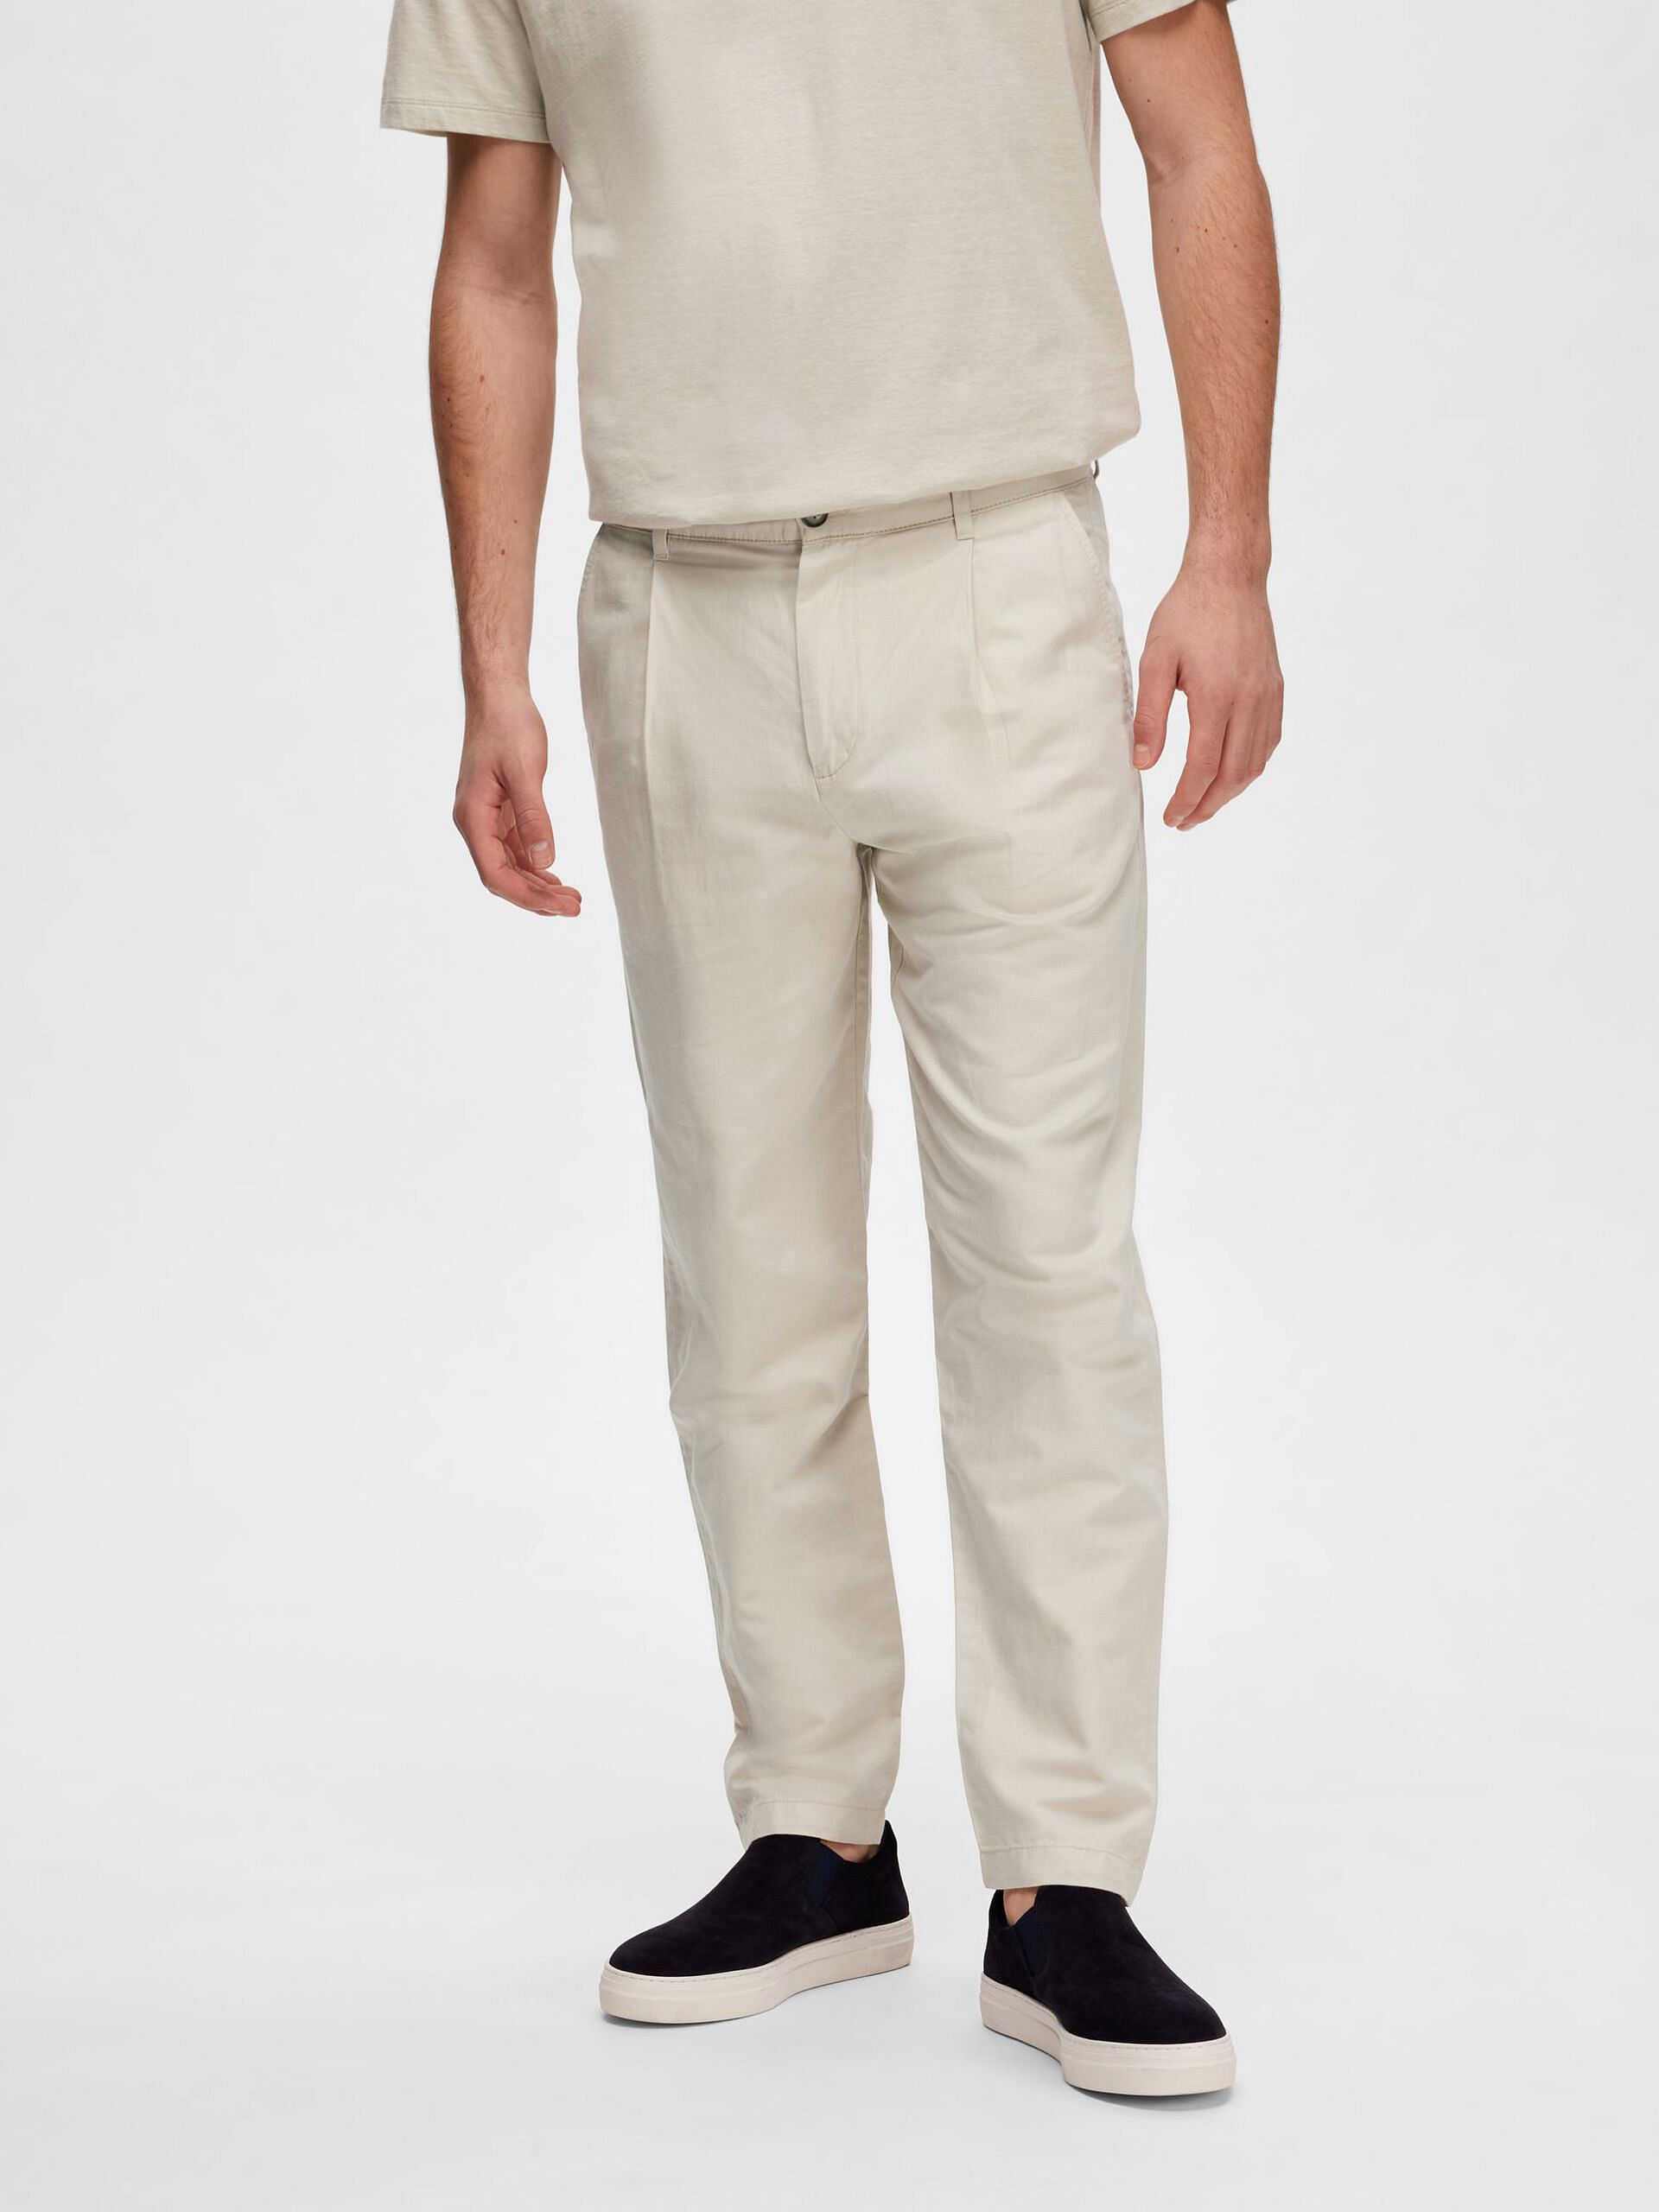 Buy Light Green Mid Rise Linen Pants for Men Online at Selected